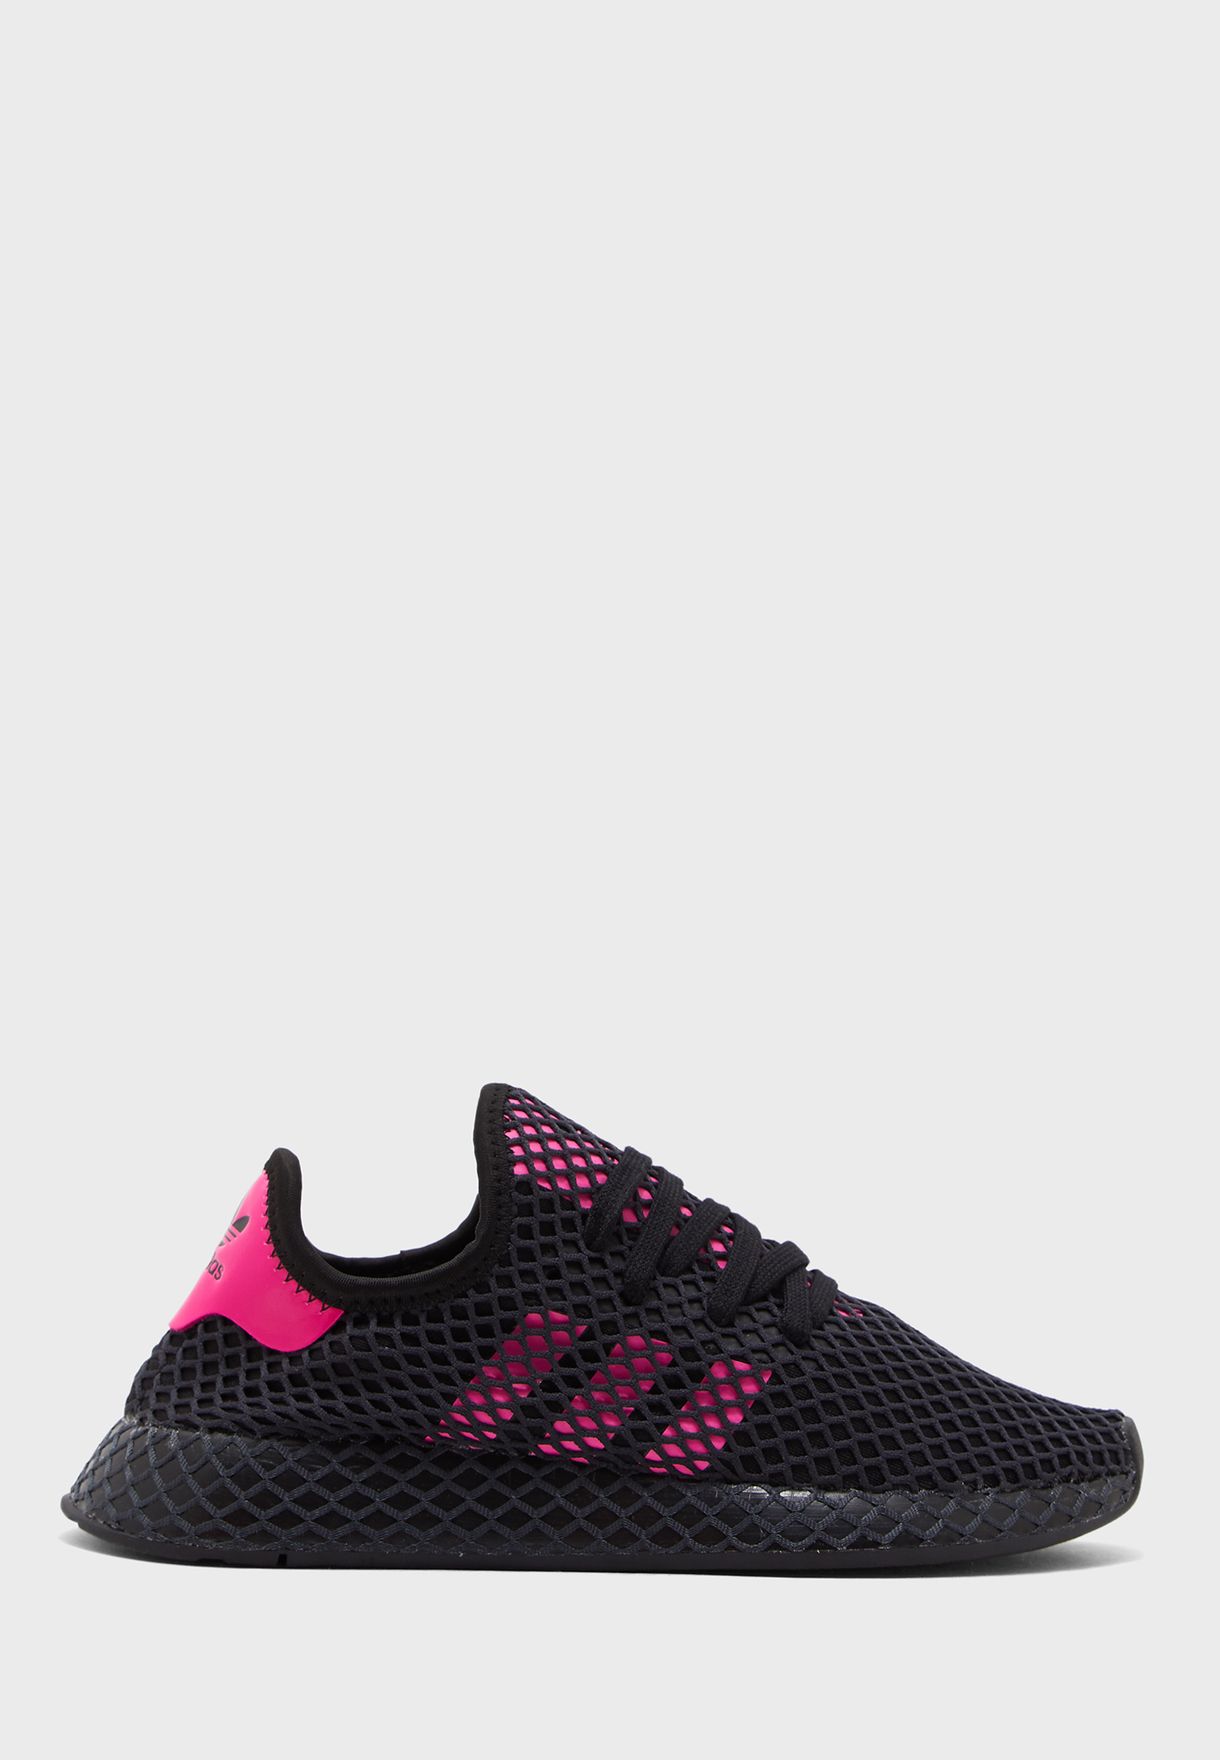 adidas deerupt runner black pink